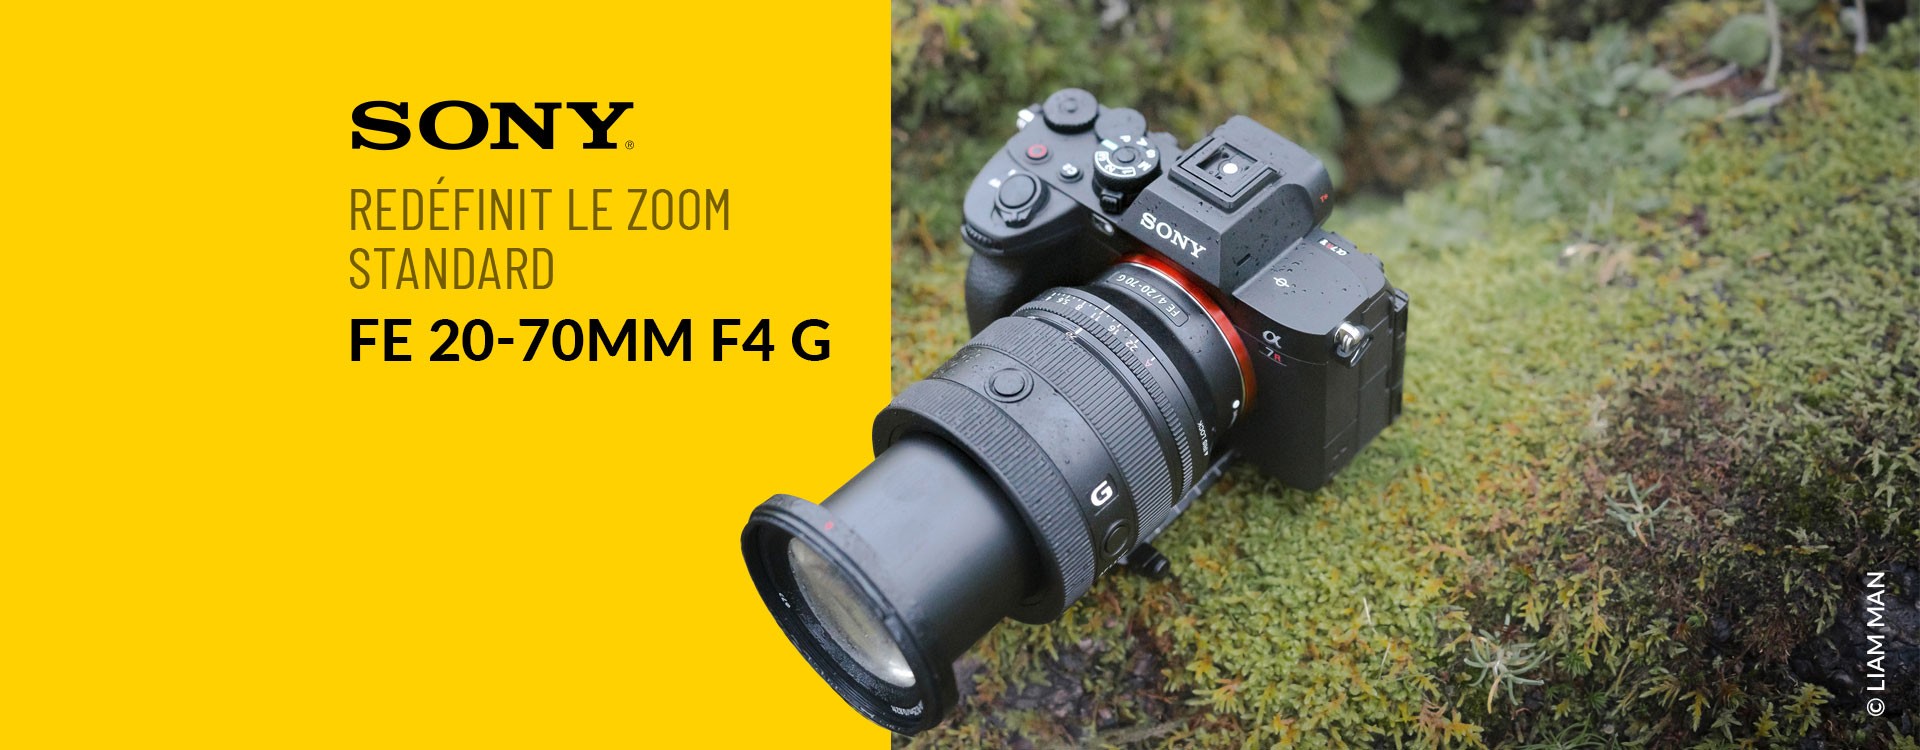 Sony redéfinit le zoom standard avec le FE 20-70mm F4 G